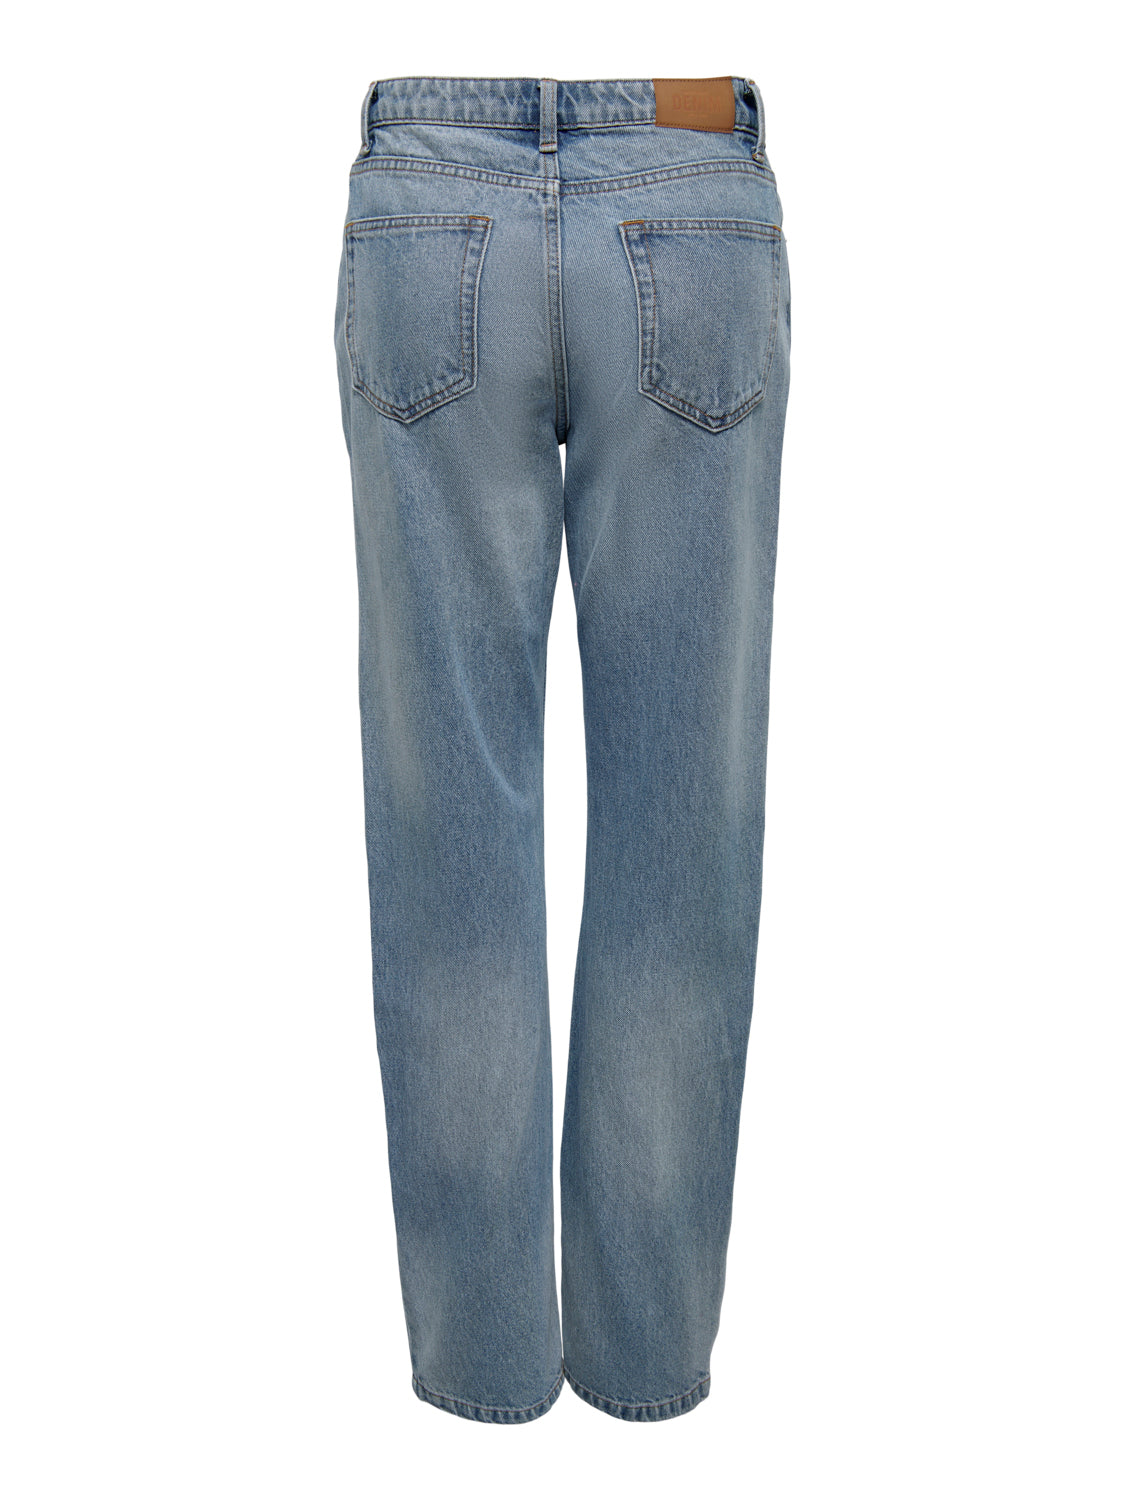 ONLDAD MW rette jeans - ADD726